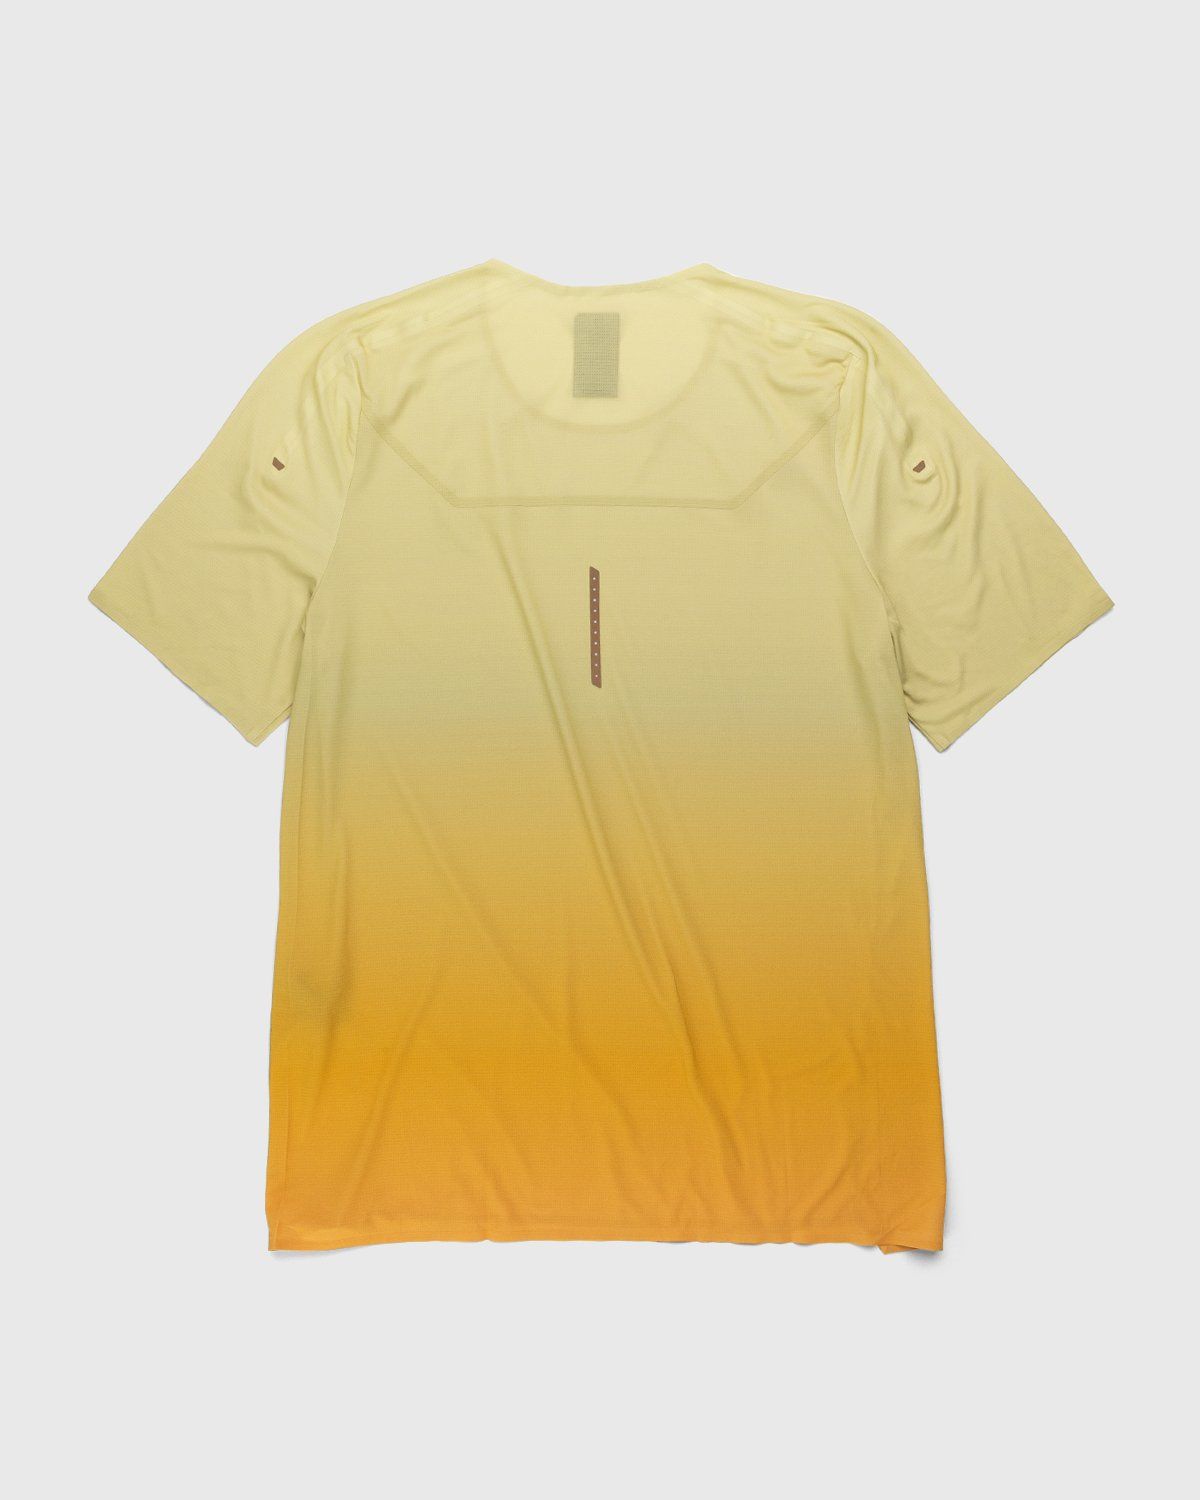 Loewe x On – Women's Performance T-Shirt Gradient Orange - Tops - Orange - Image 2